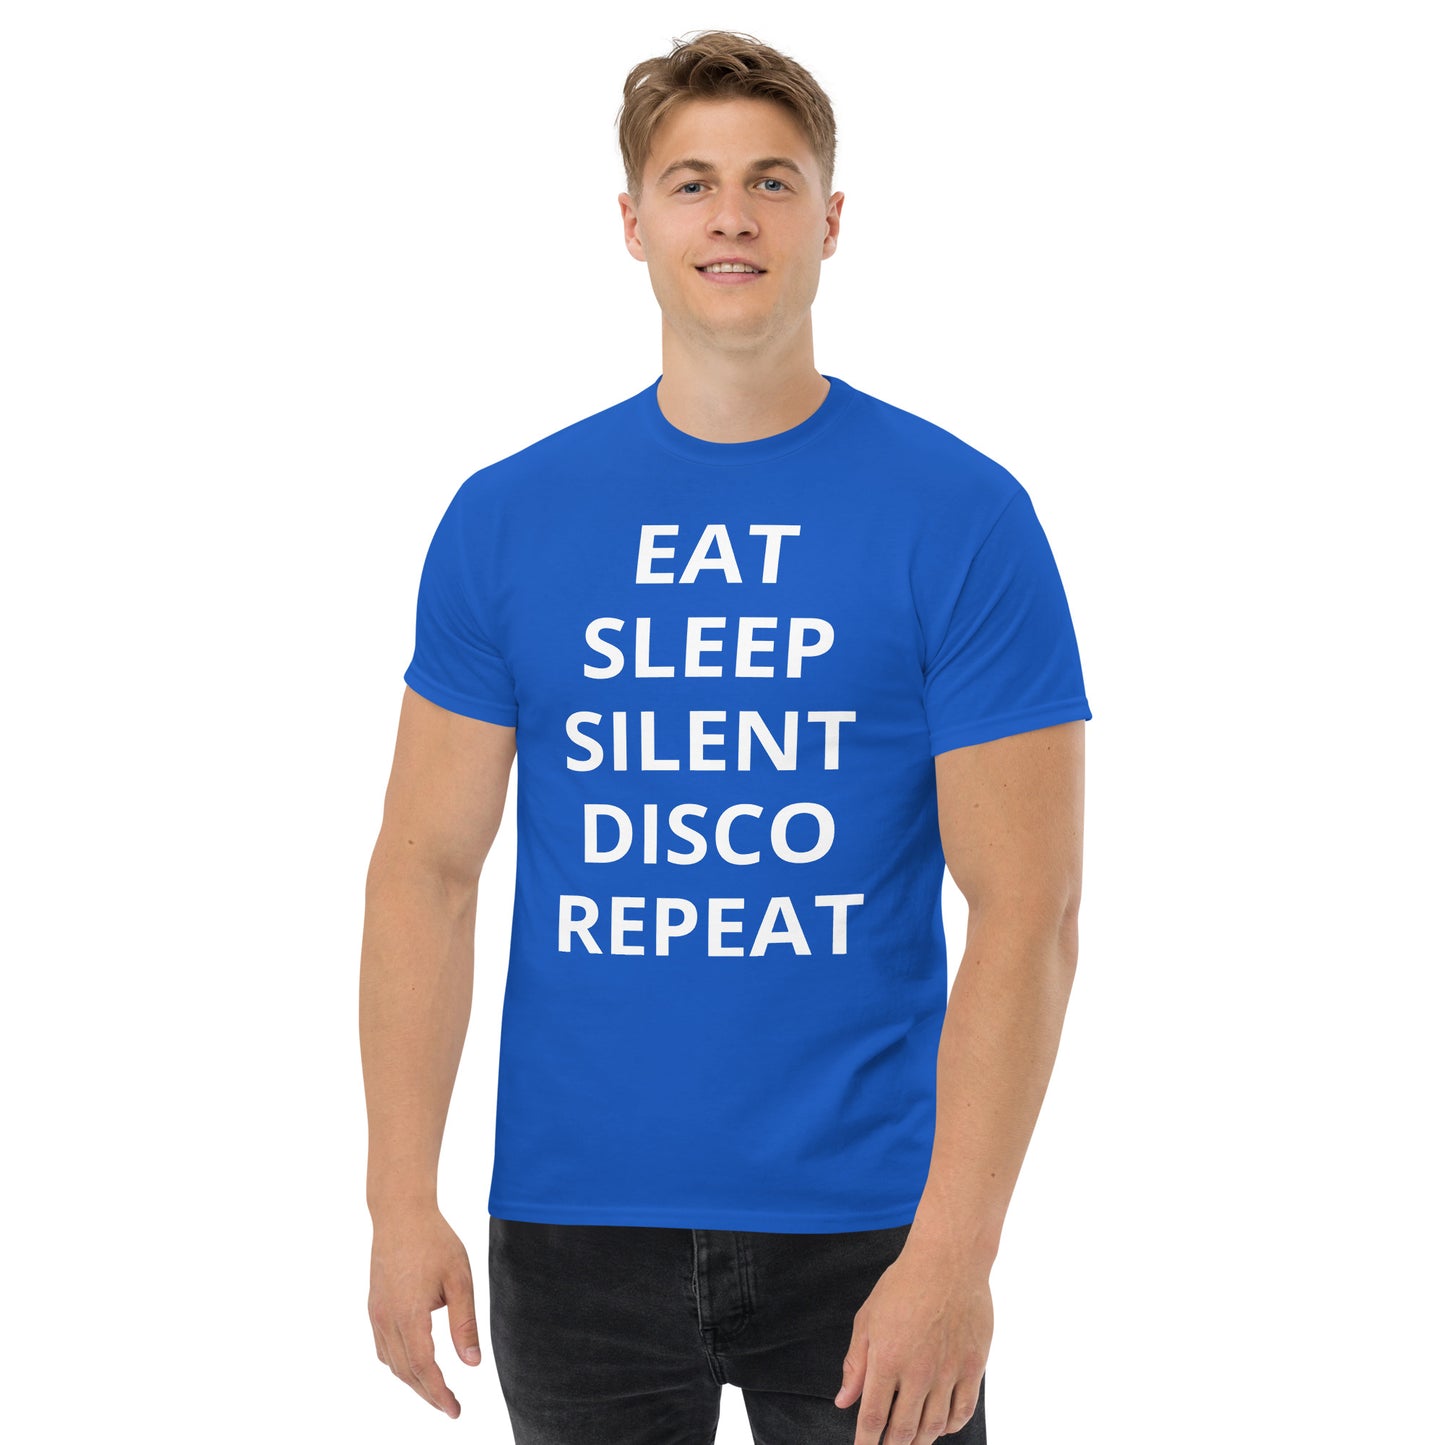 Eat Sleep Silent Disco Repeat! (Men's)